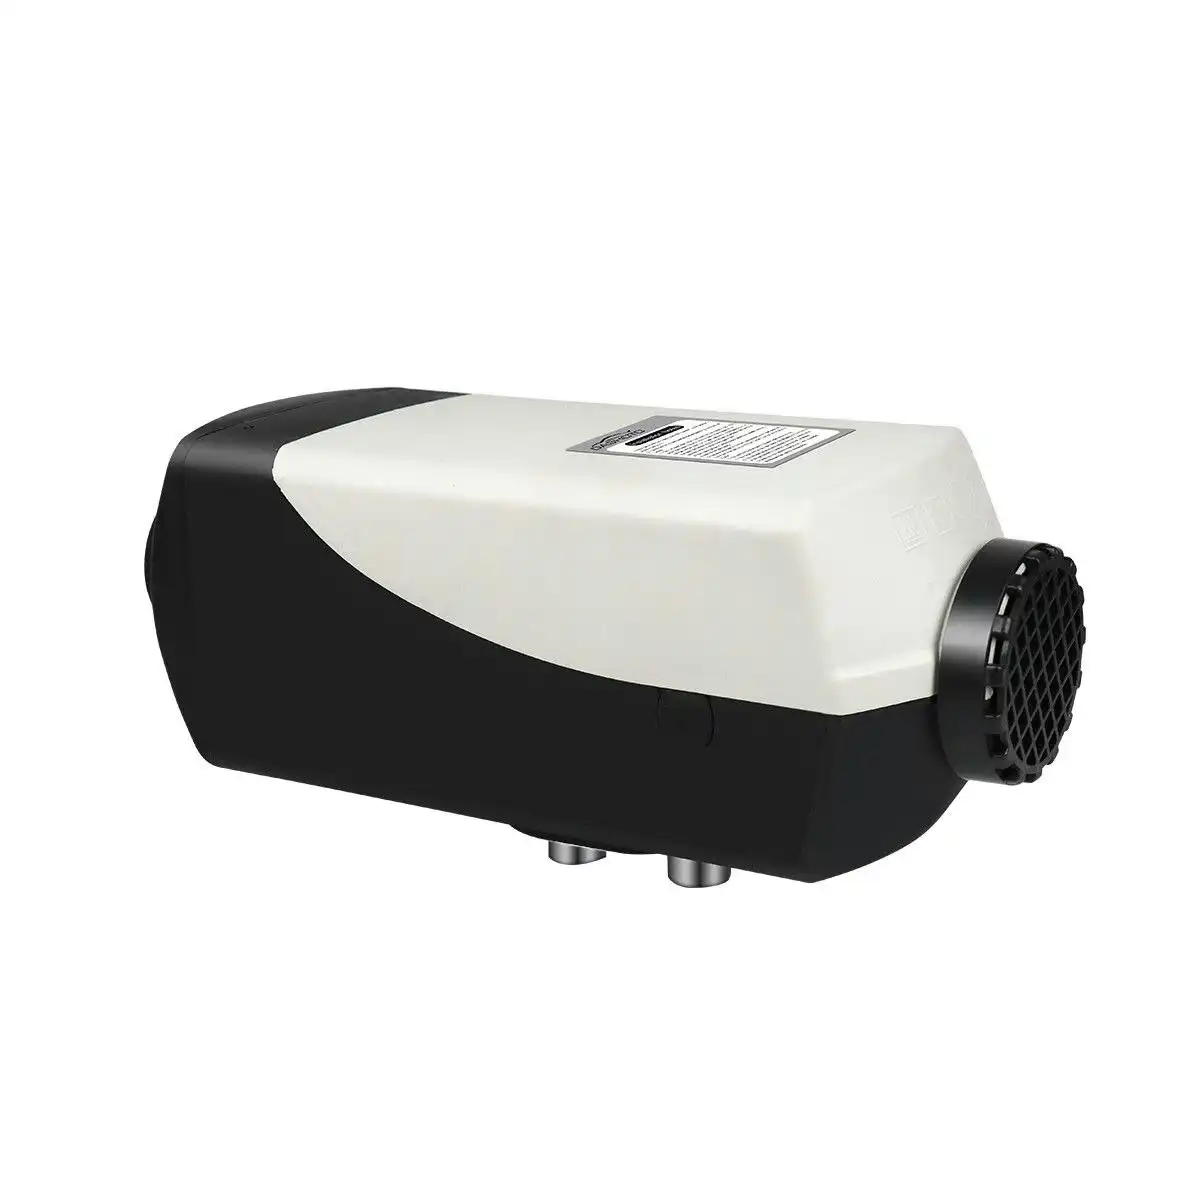 DASHOTO 8kW 12V RV Diesel Air Heater Kit Portable Vehicle Heater w/ LCD Remote Control - Black & Grey